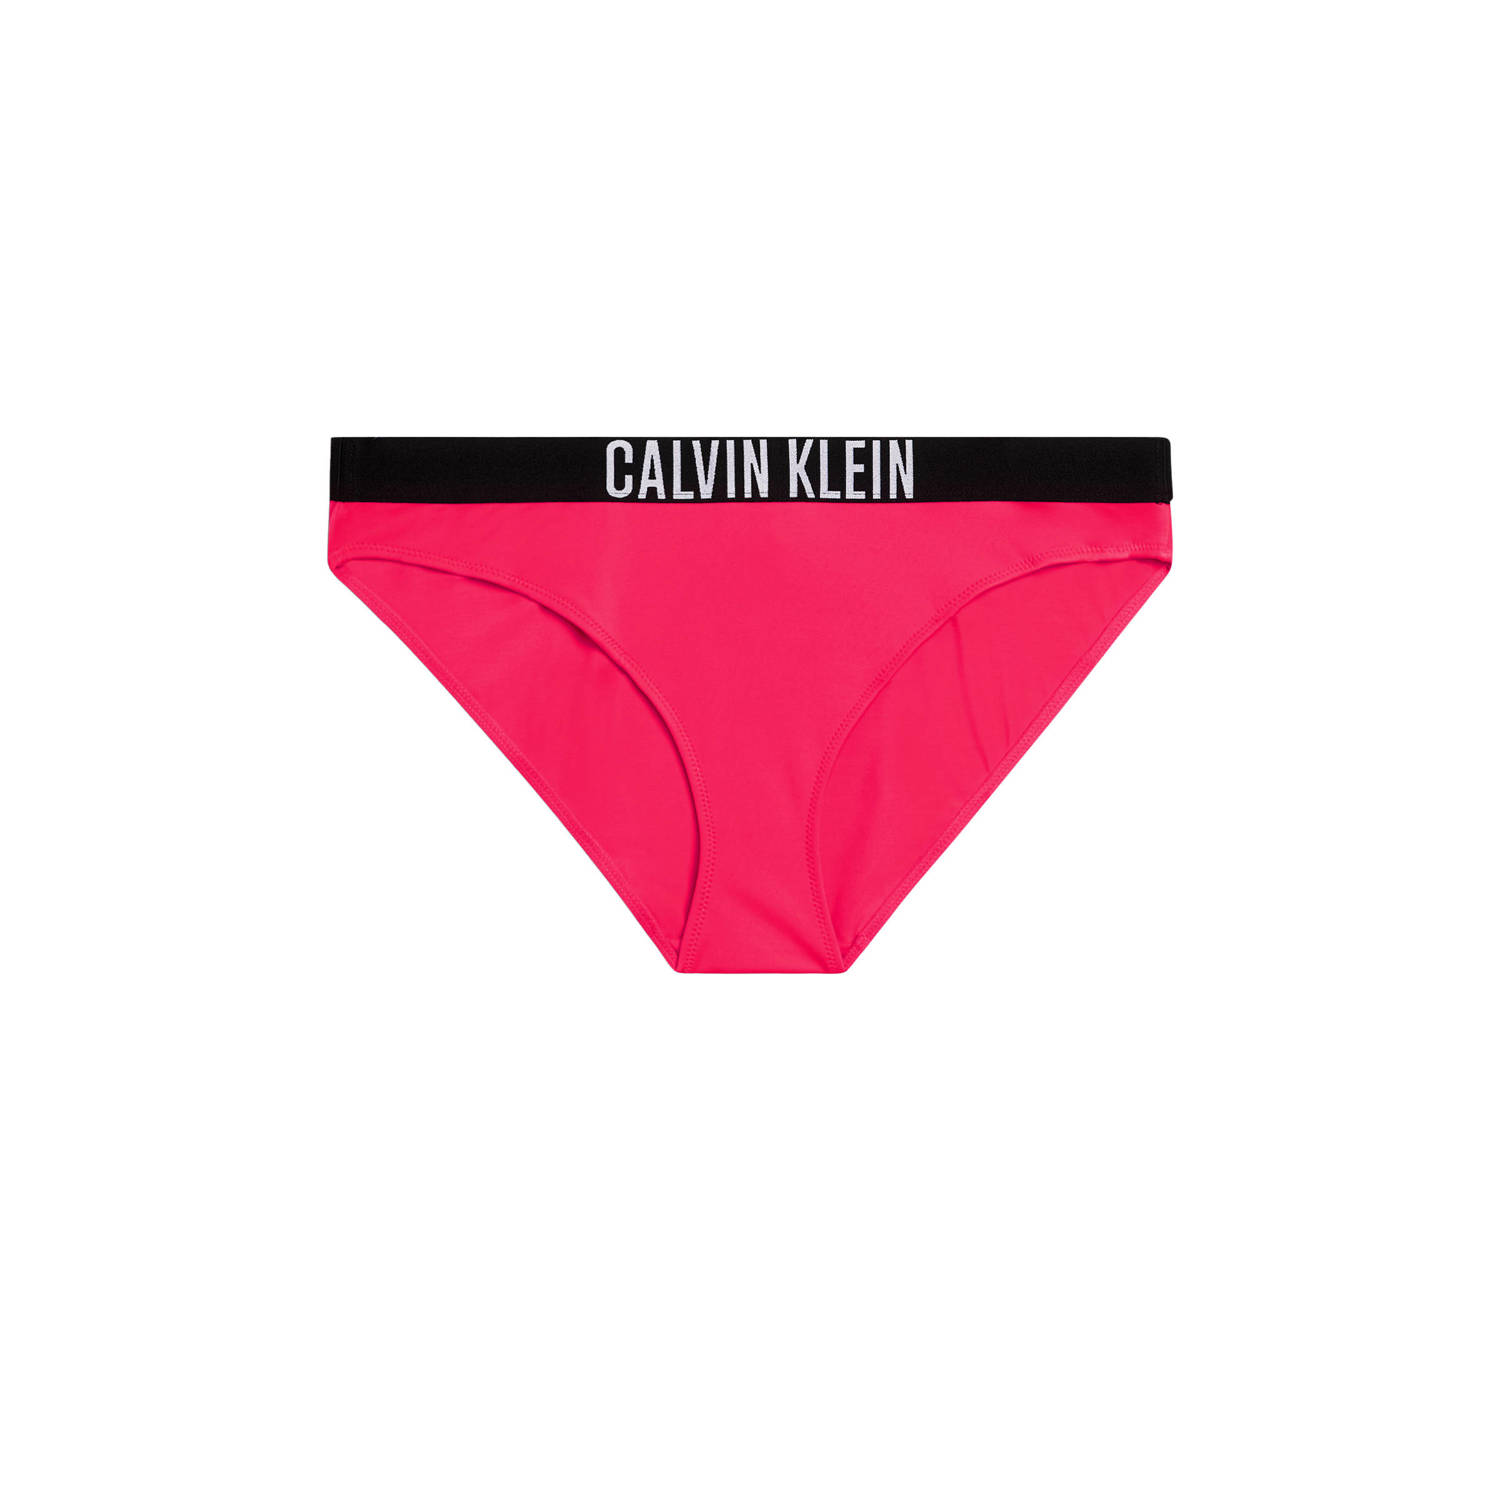 Calvin Klein bikinibroekje rood